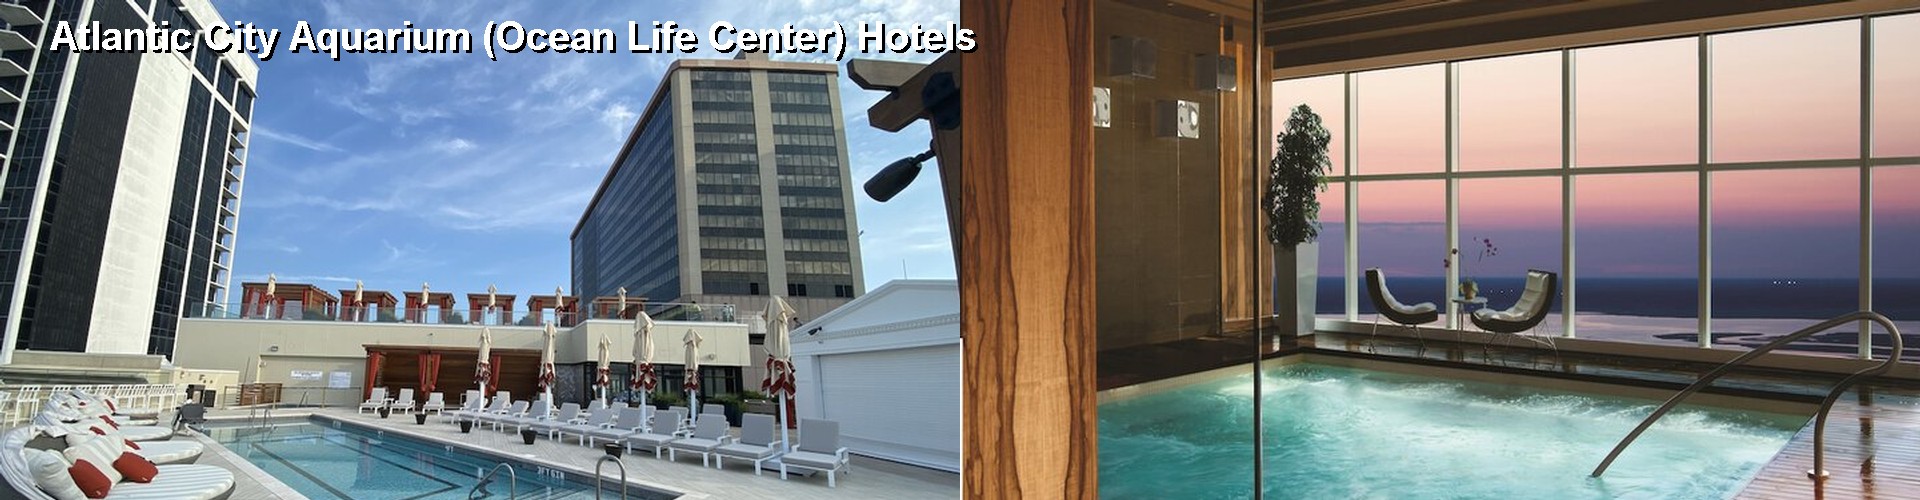 5 Best Hotels near Atlantic City Aquarium (Ocean Life Center)